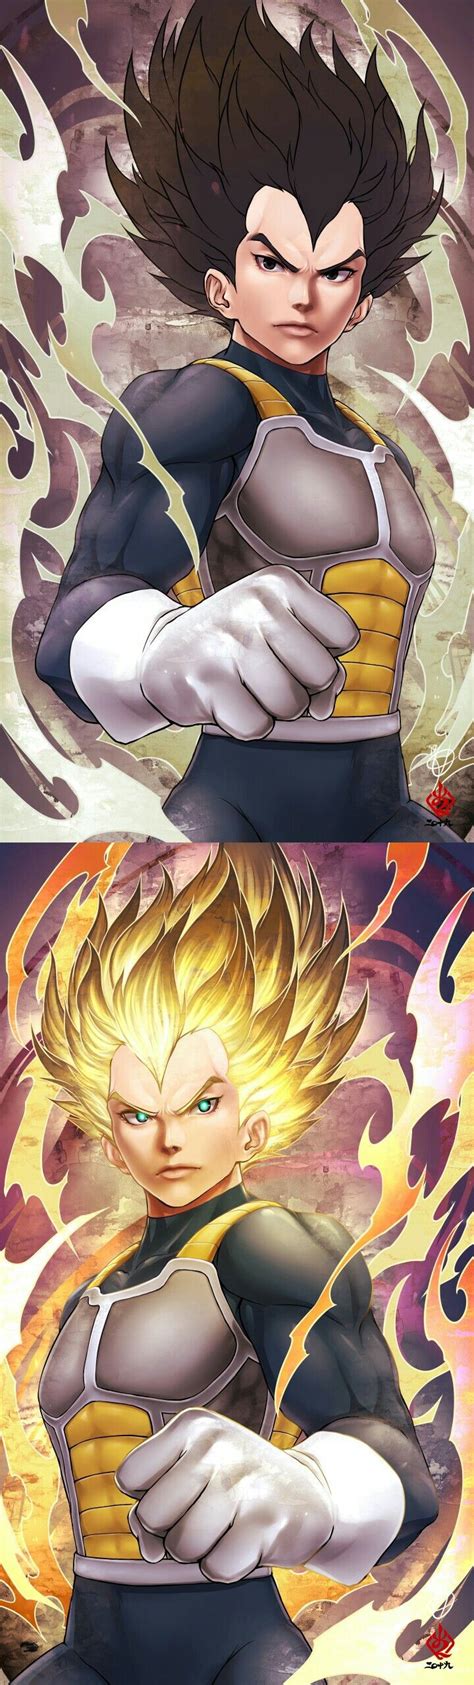 Dragon ball super episode 59 subbed. Vegeta by Kanchiyo | Manga, Animé, Anime